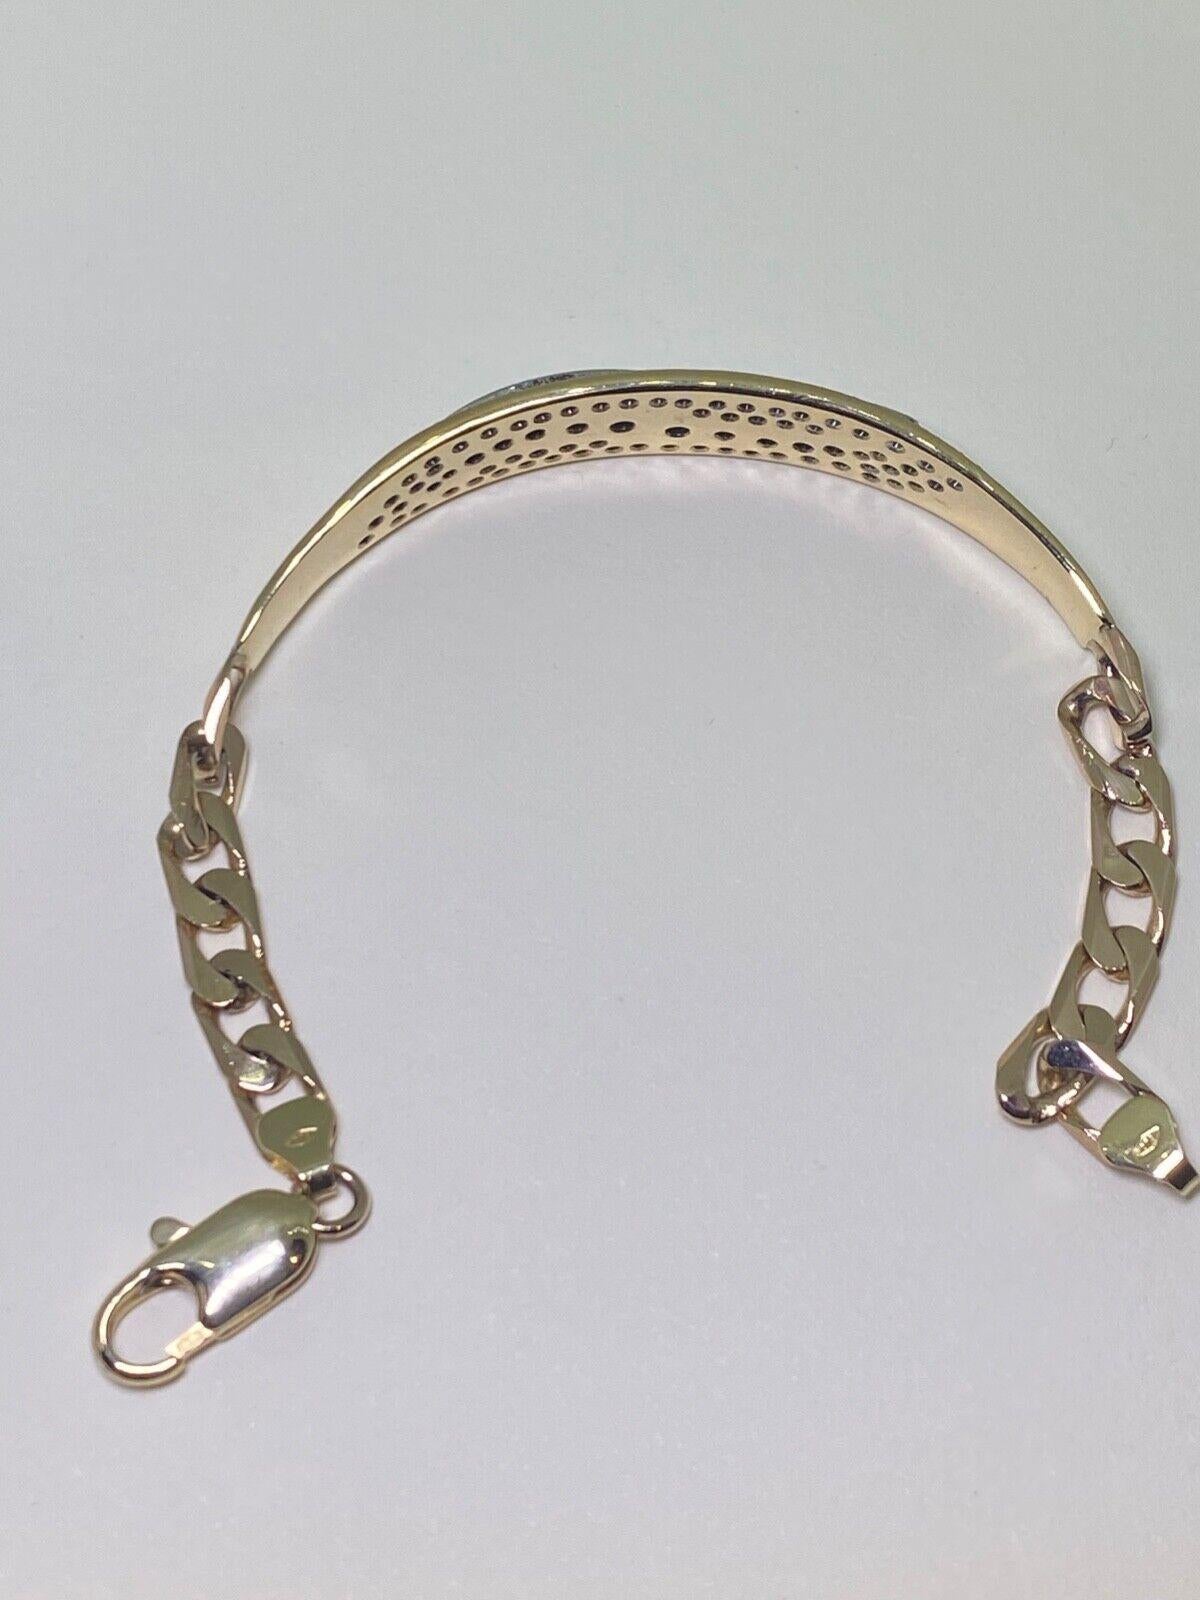 Brilliant Cut 2.50ct Diamond Bangle/Bracelet in 2-Tone 9K Gold by Unoaerre (est. 1926), Italy For Sale